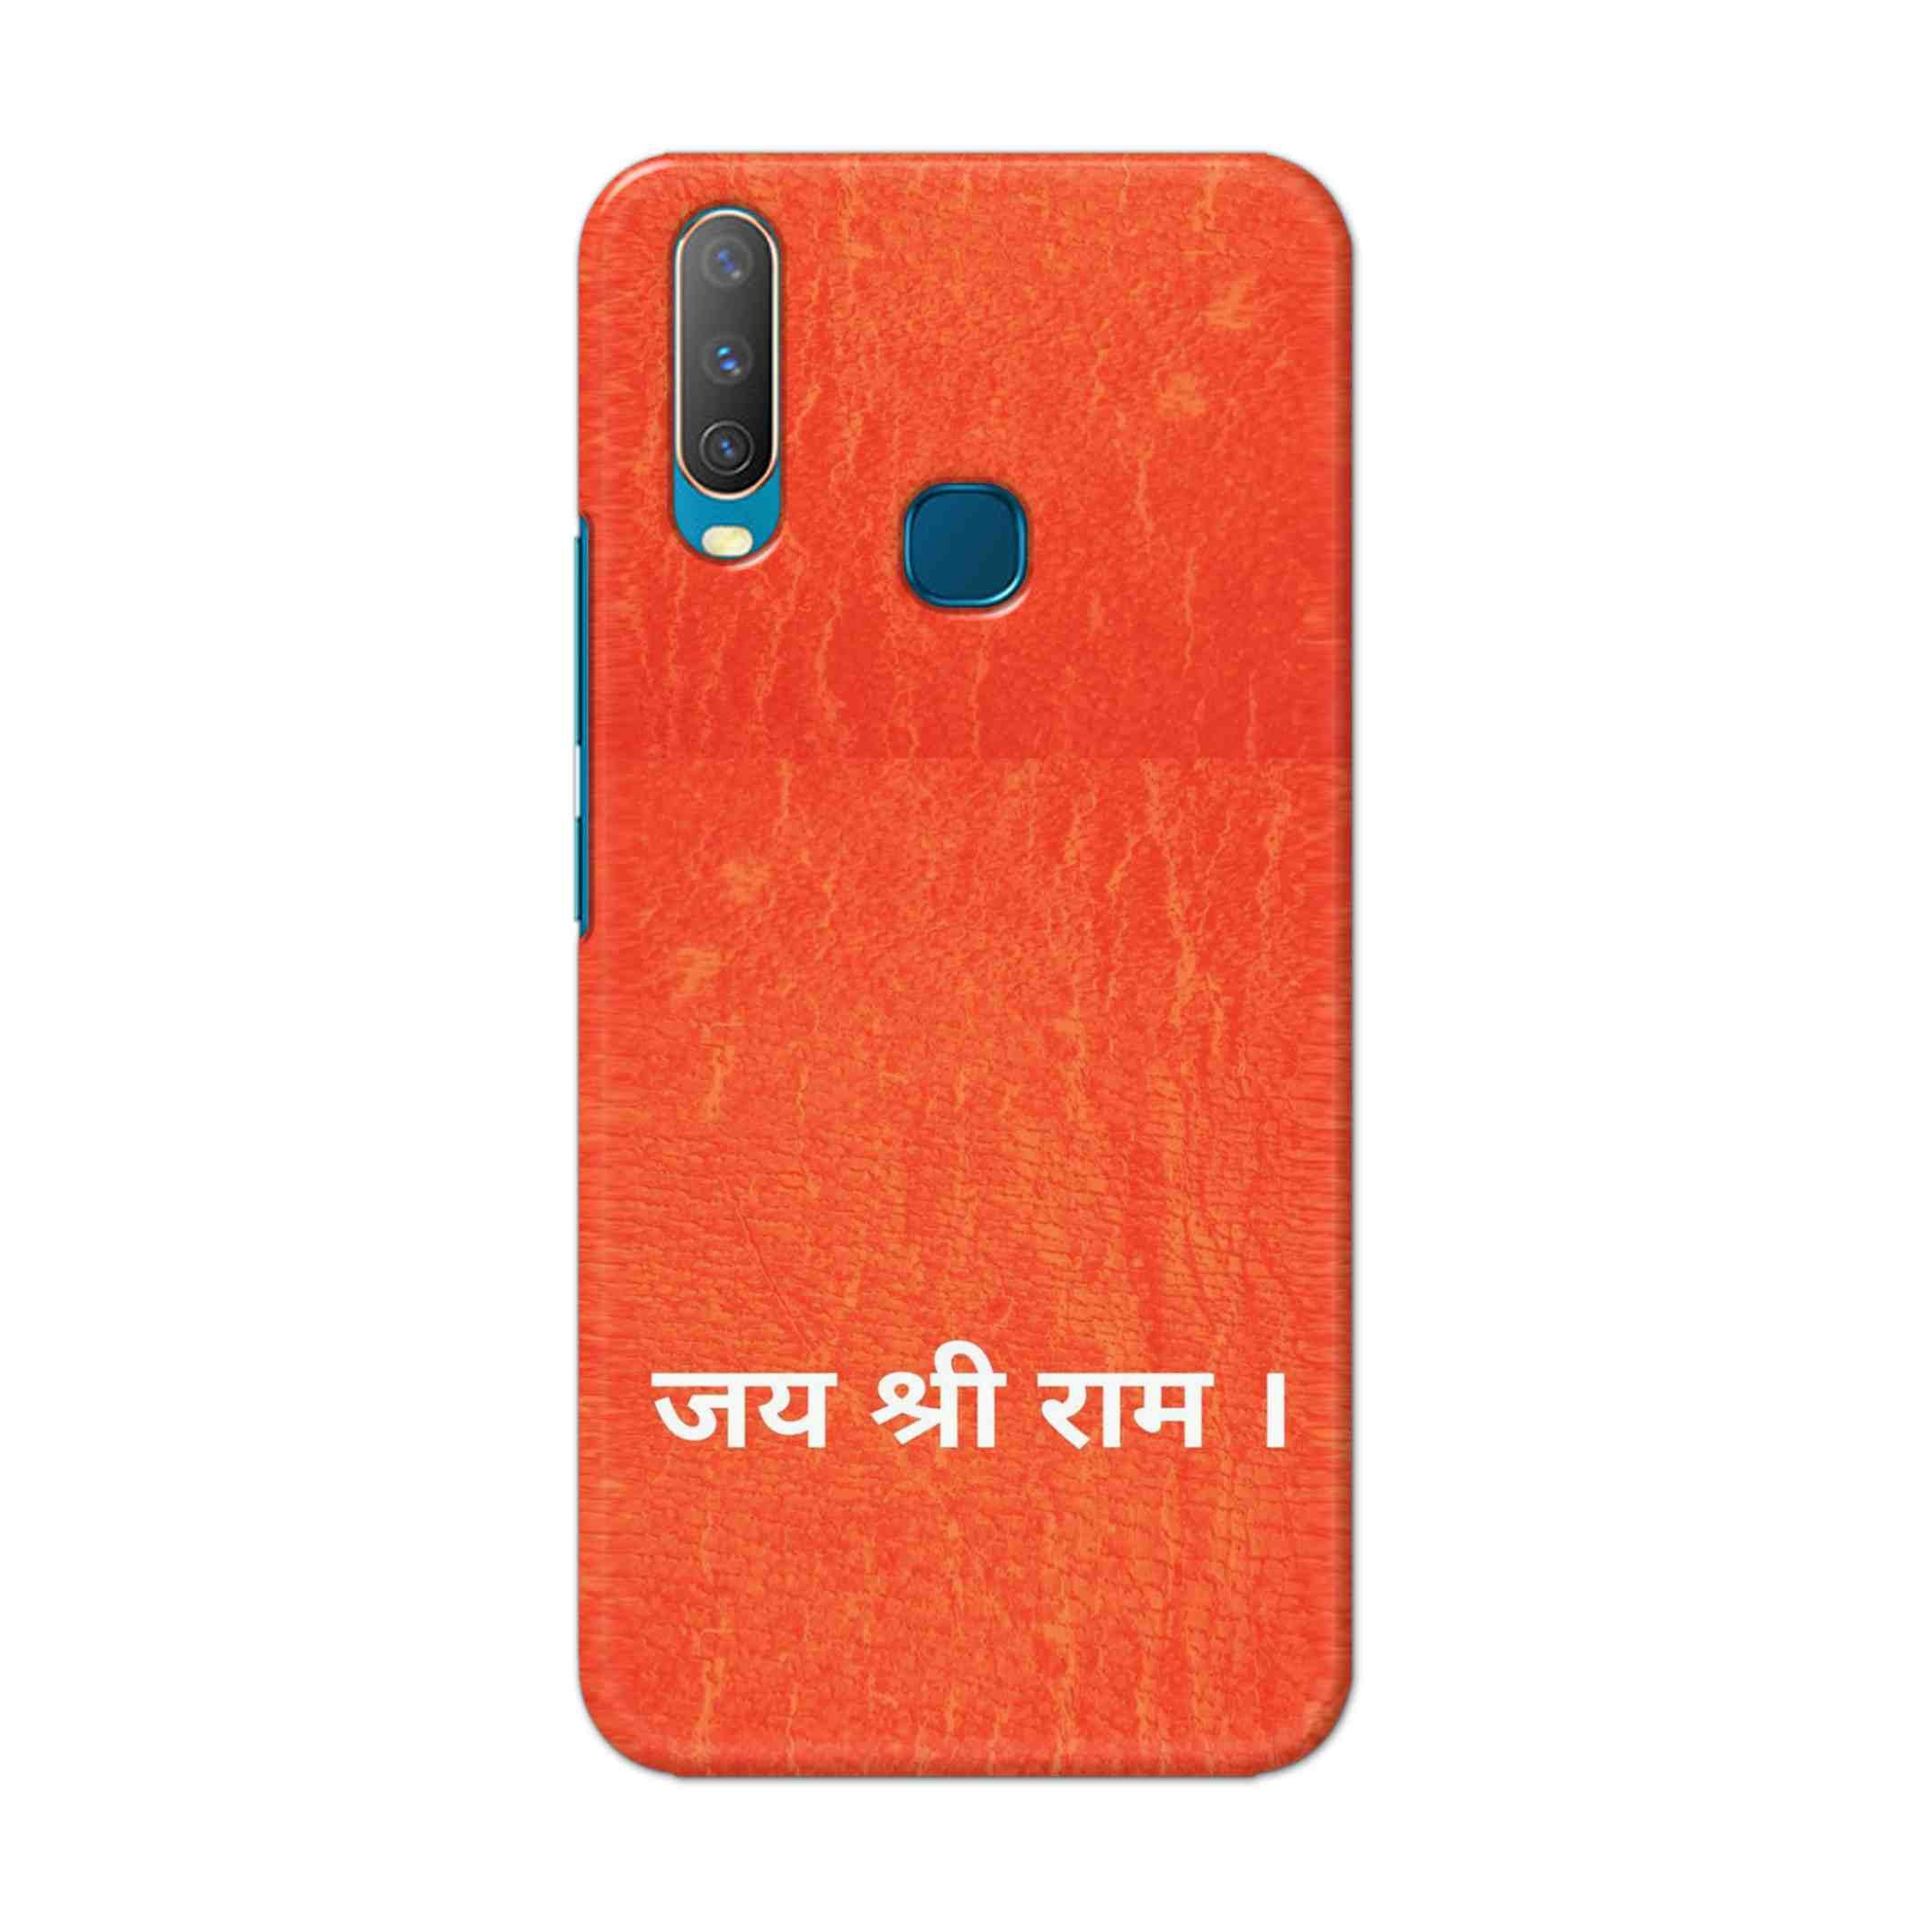 Buy Jai Shree Ram Hard Back Mobile Phone Case Cover For Vivo Y17 / U10 Online